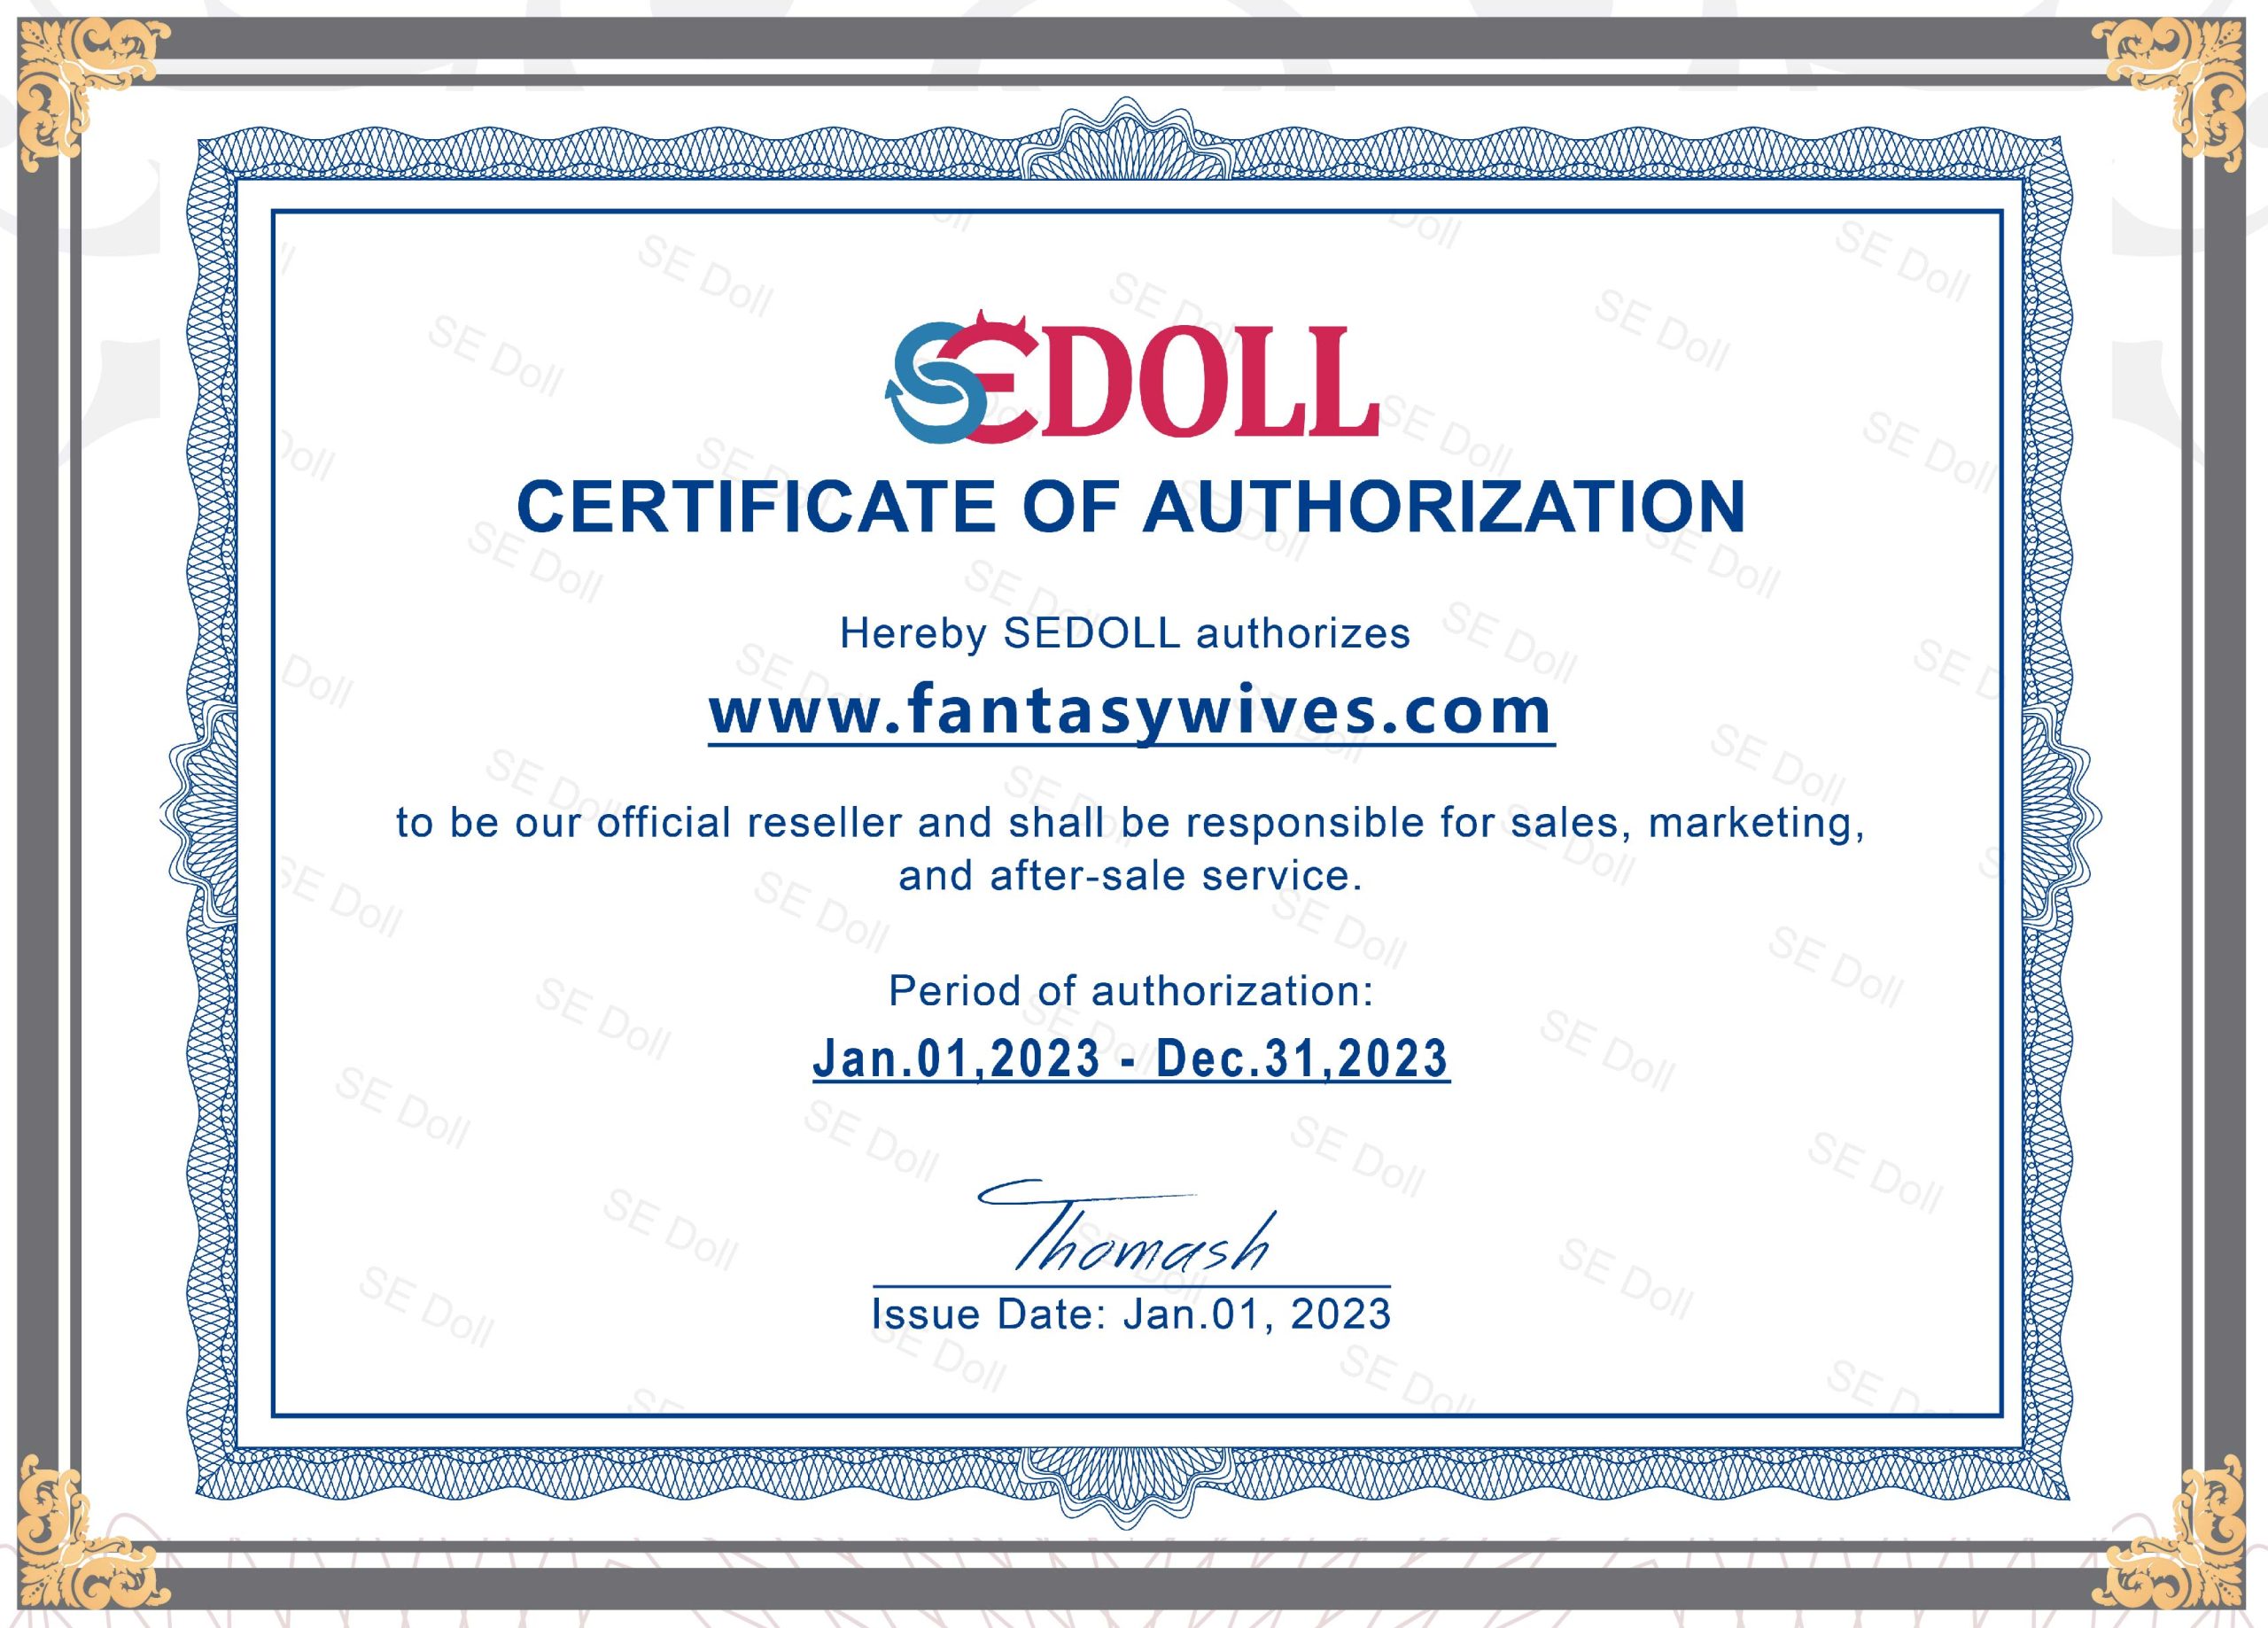 SEDOLL Certificate